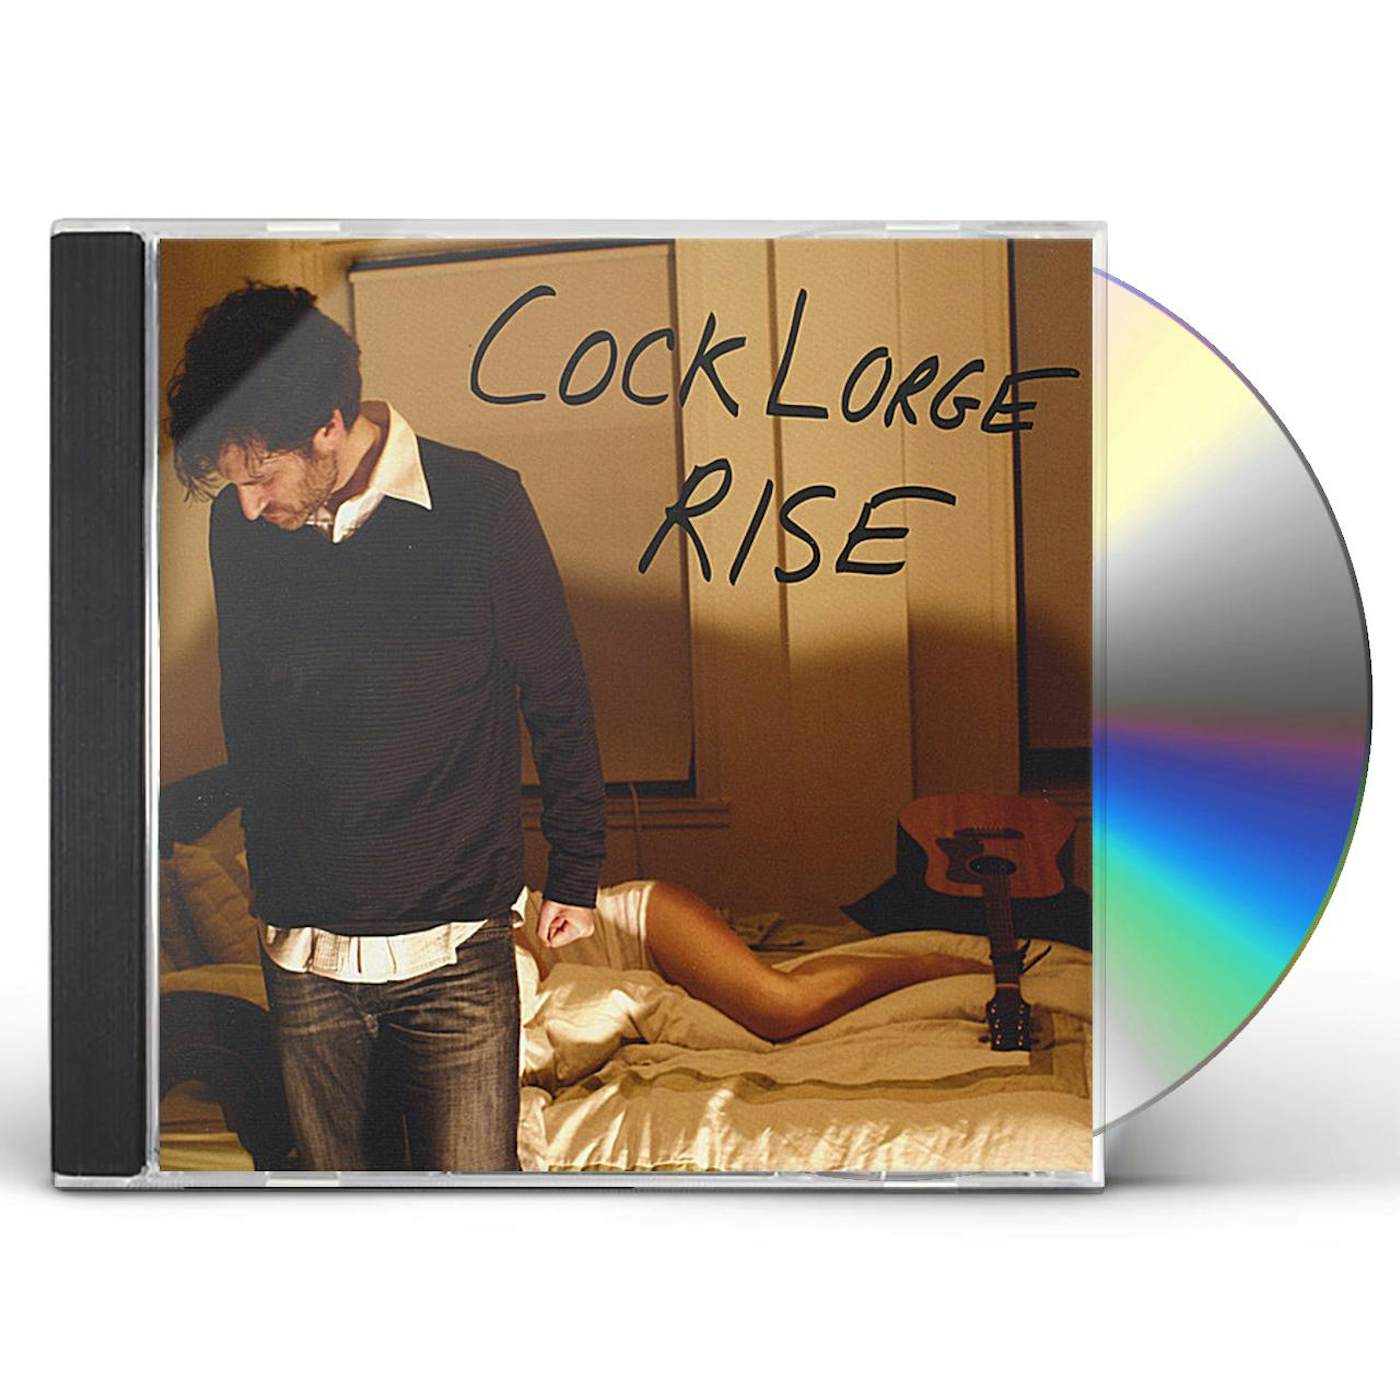 Cock Lorge RISE CD